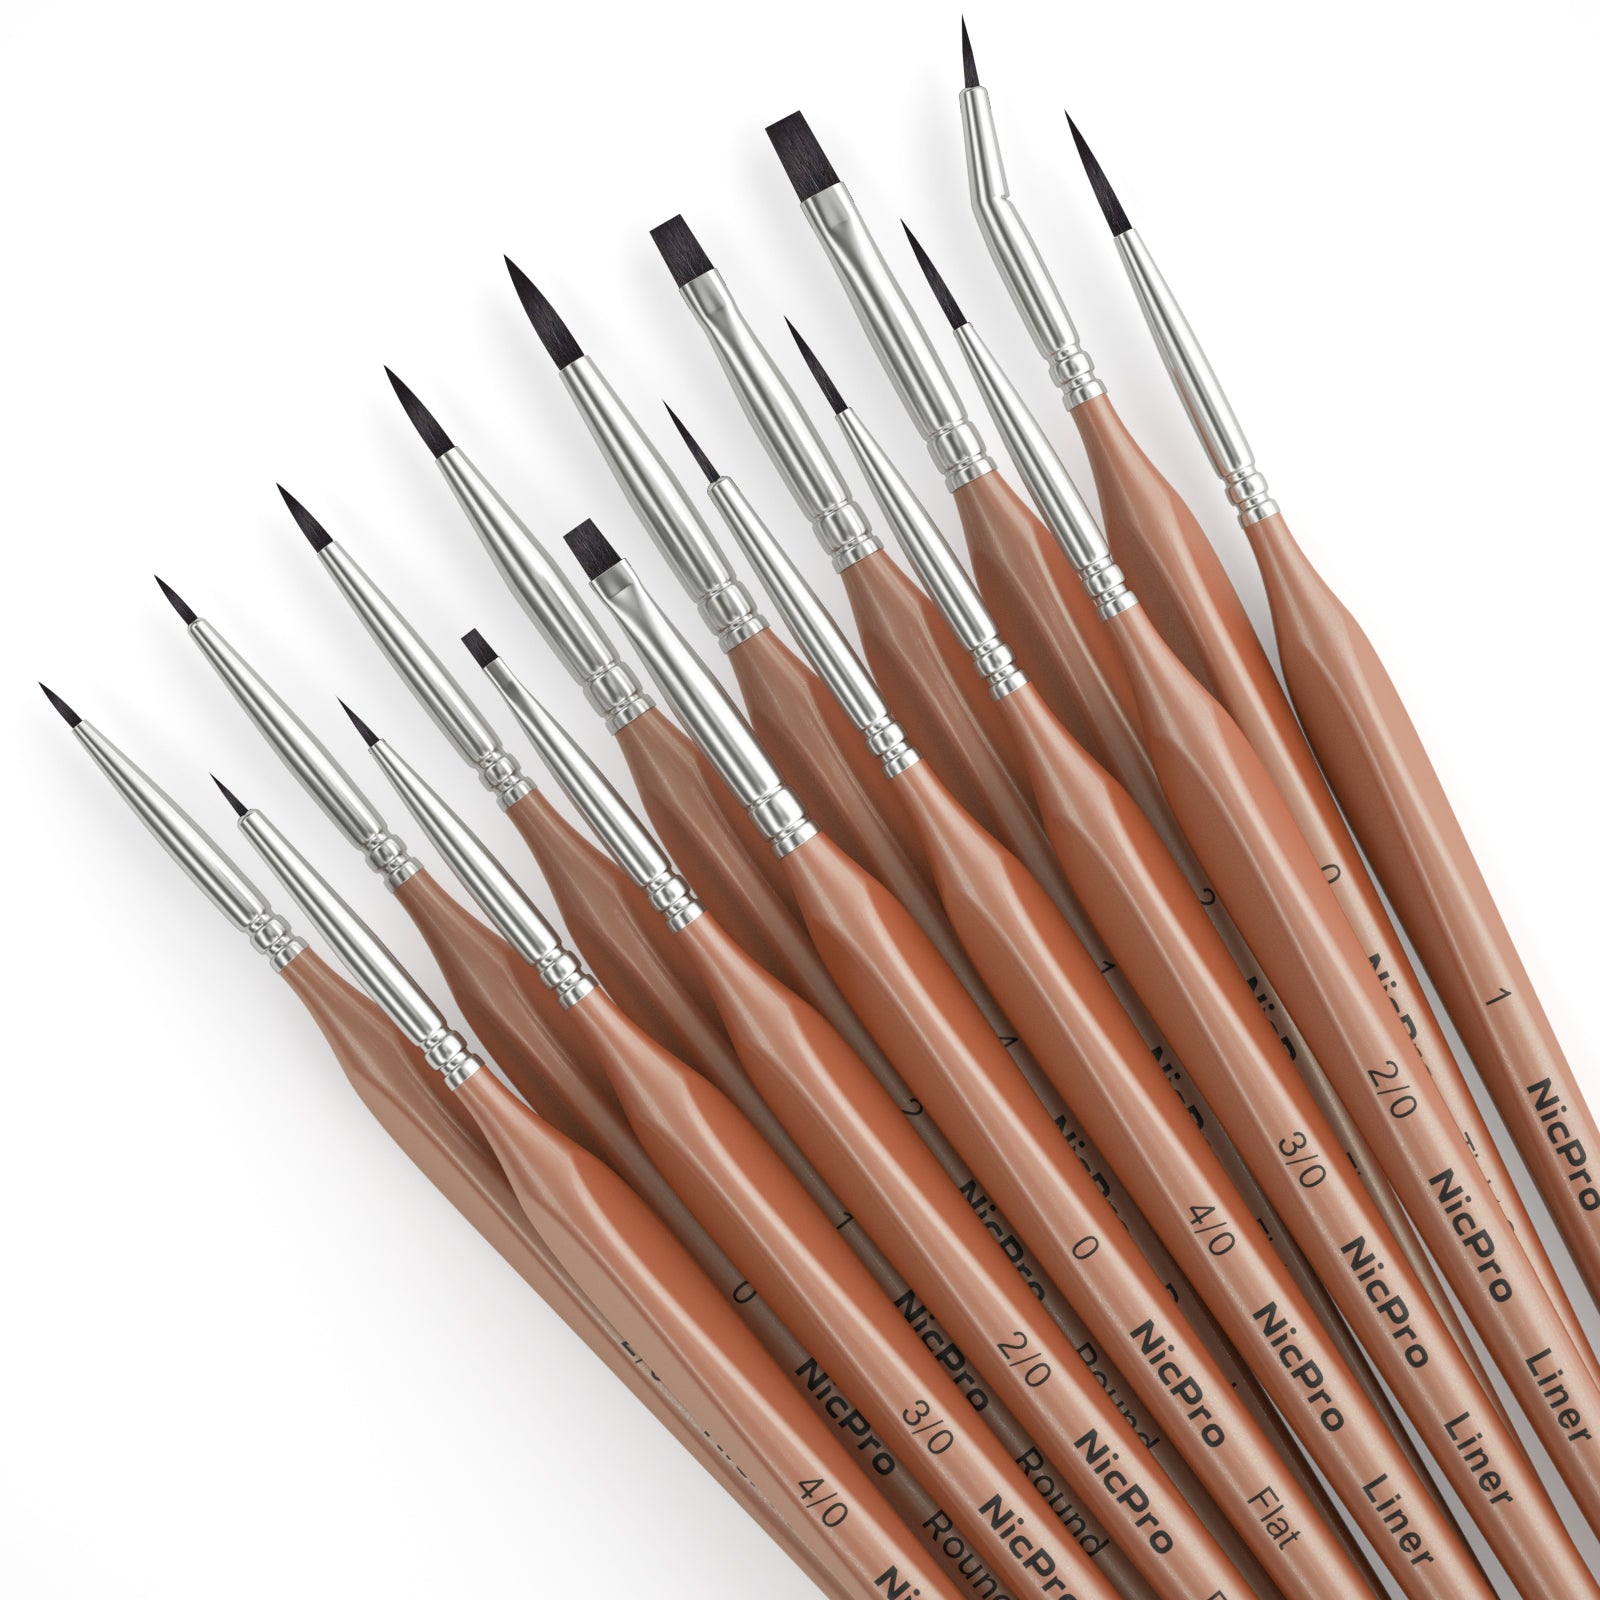 Nicpro Detail Paint Brushes 5 PCS Extra Fine Tip 000 Professional Mini